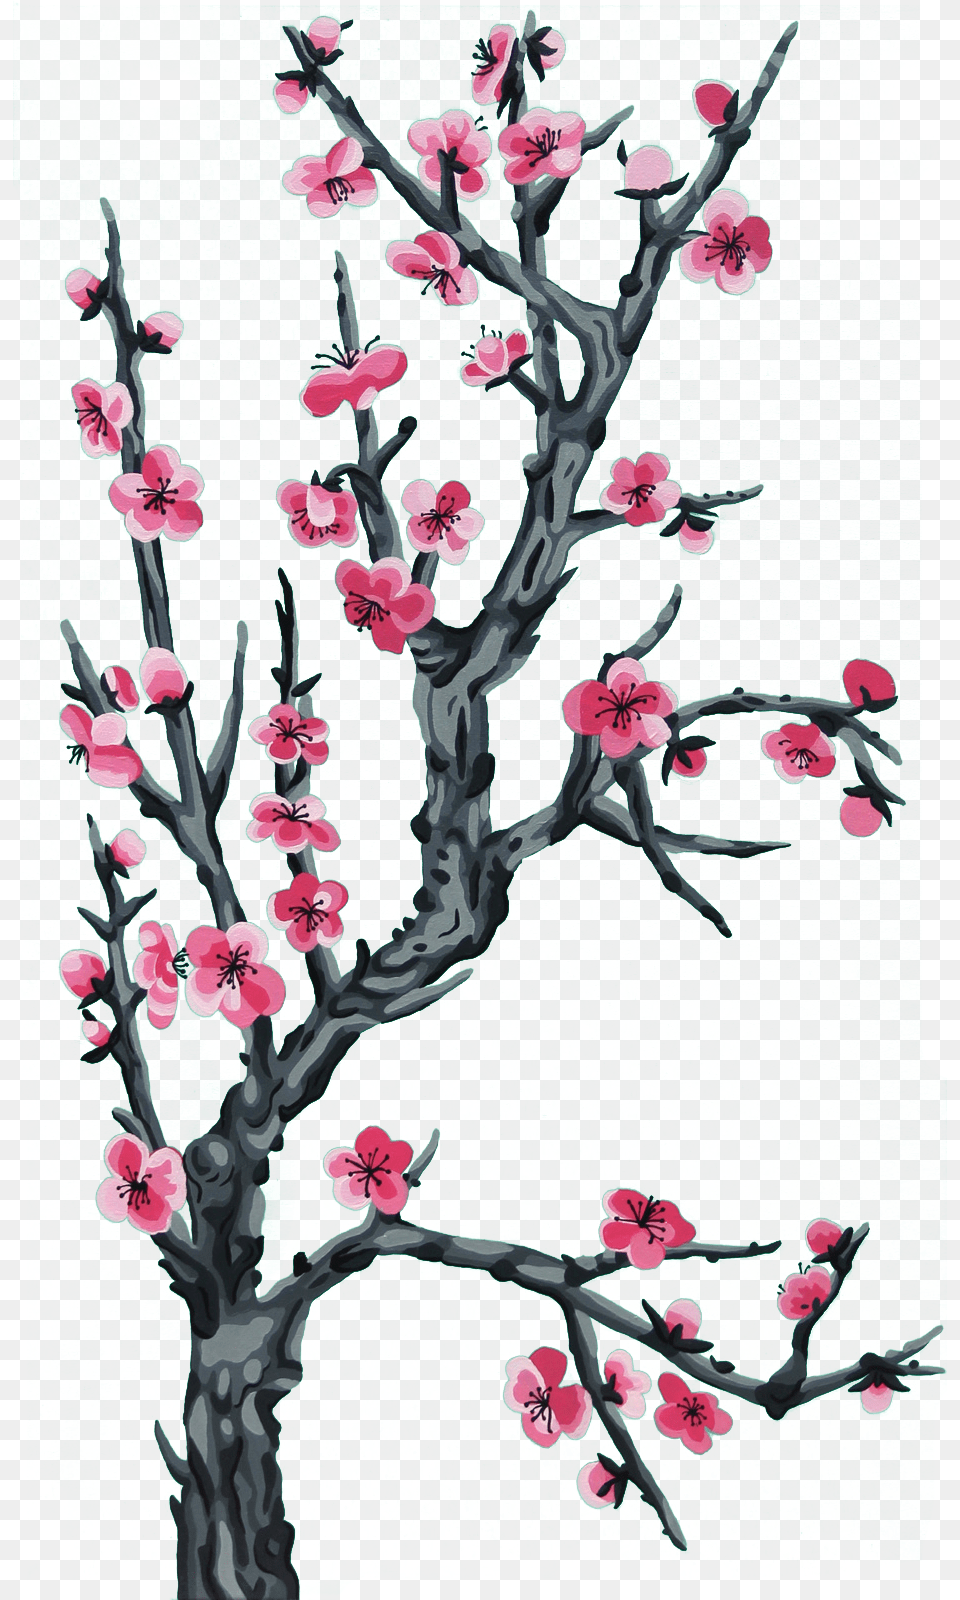 Arizona Iced Tea Background, Flower, Plant, Cherry Blossom Png